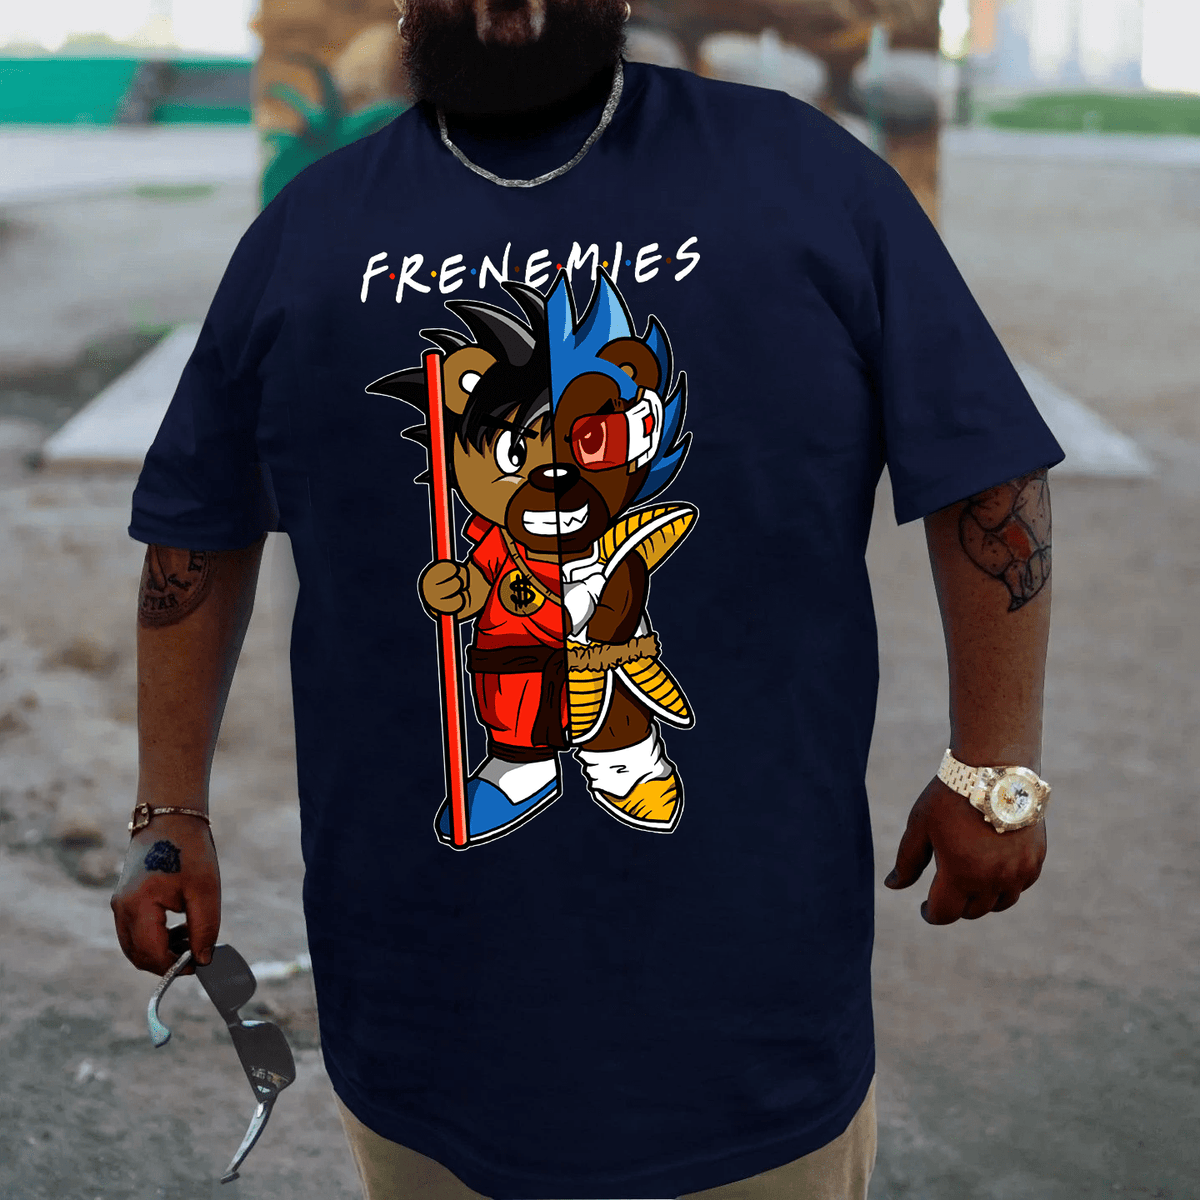 Frenemies, Creative Men Plus Size Oversize T-shirt for Big & Tall Man